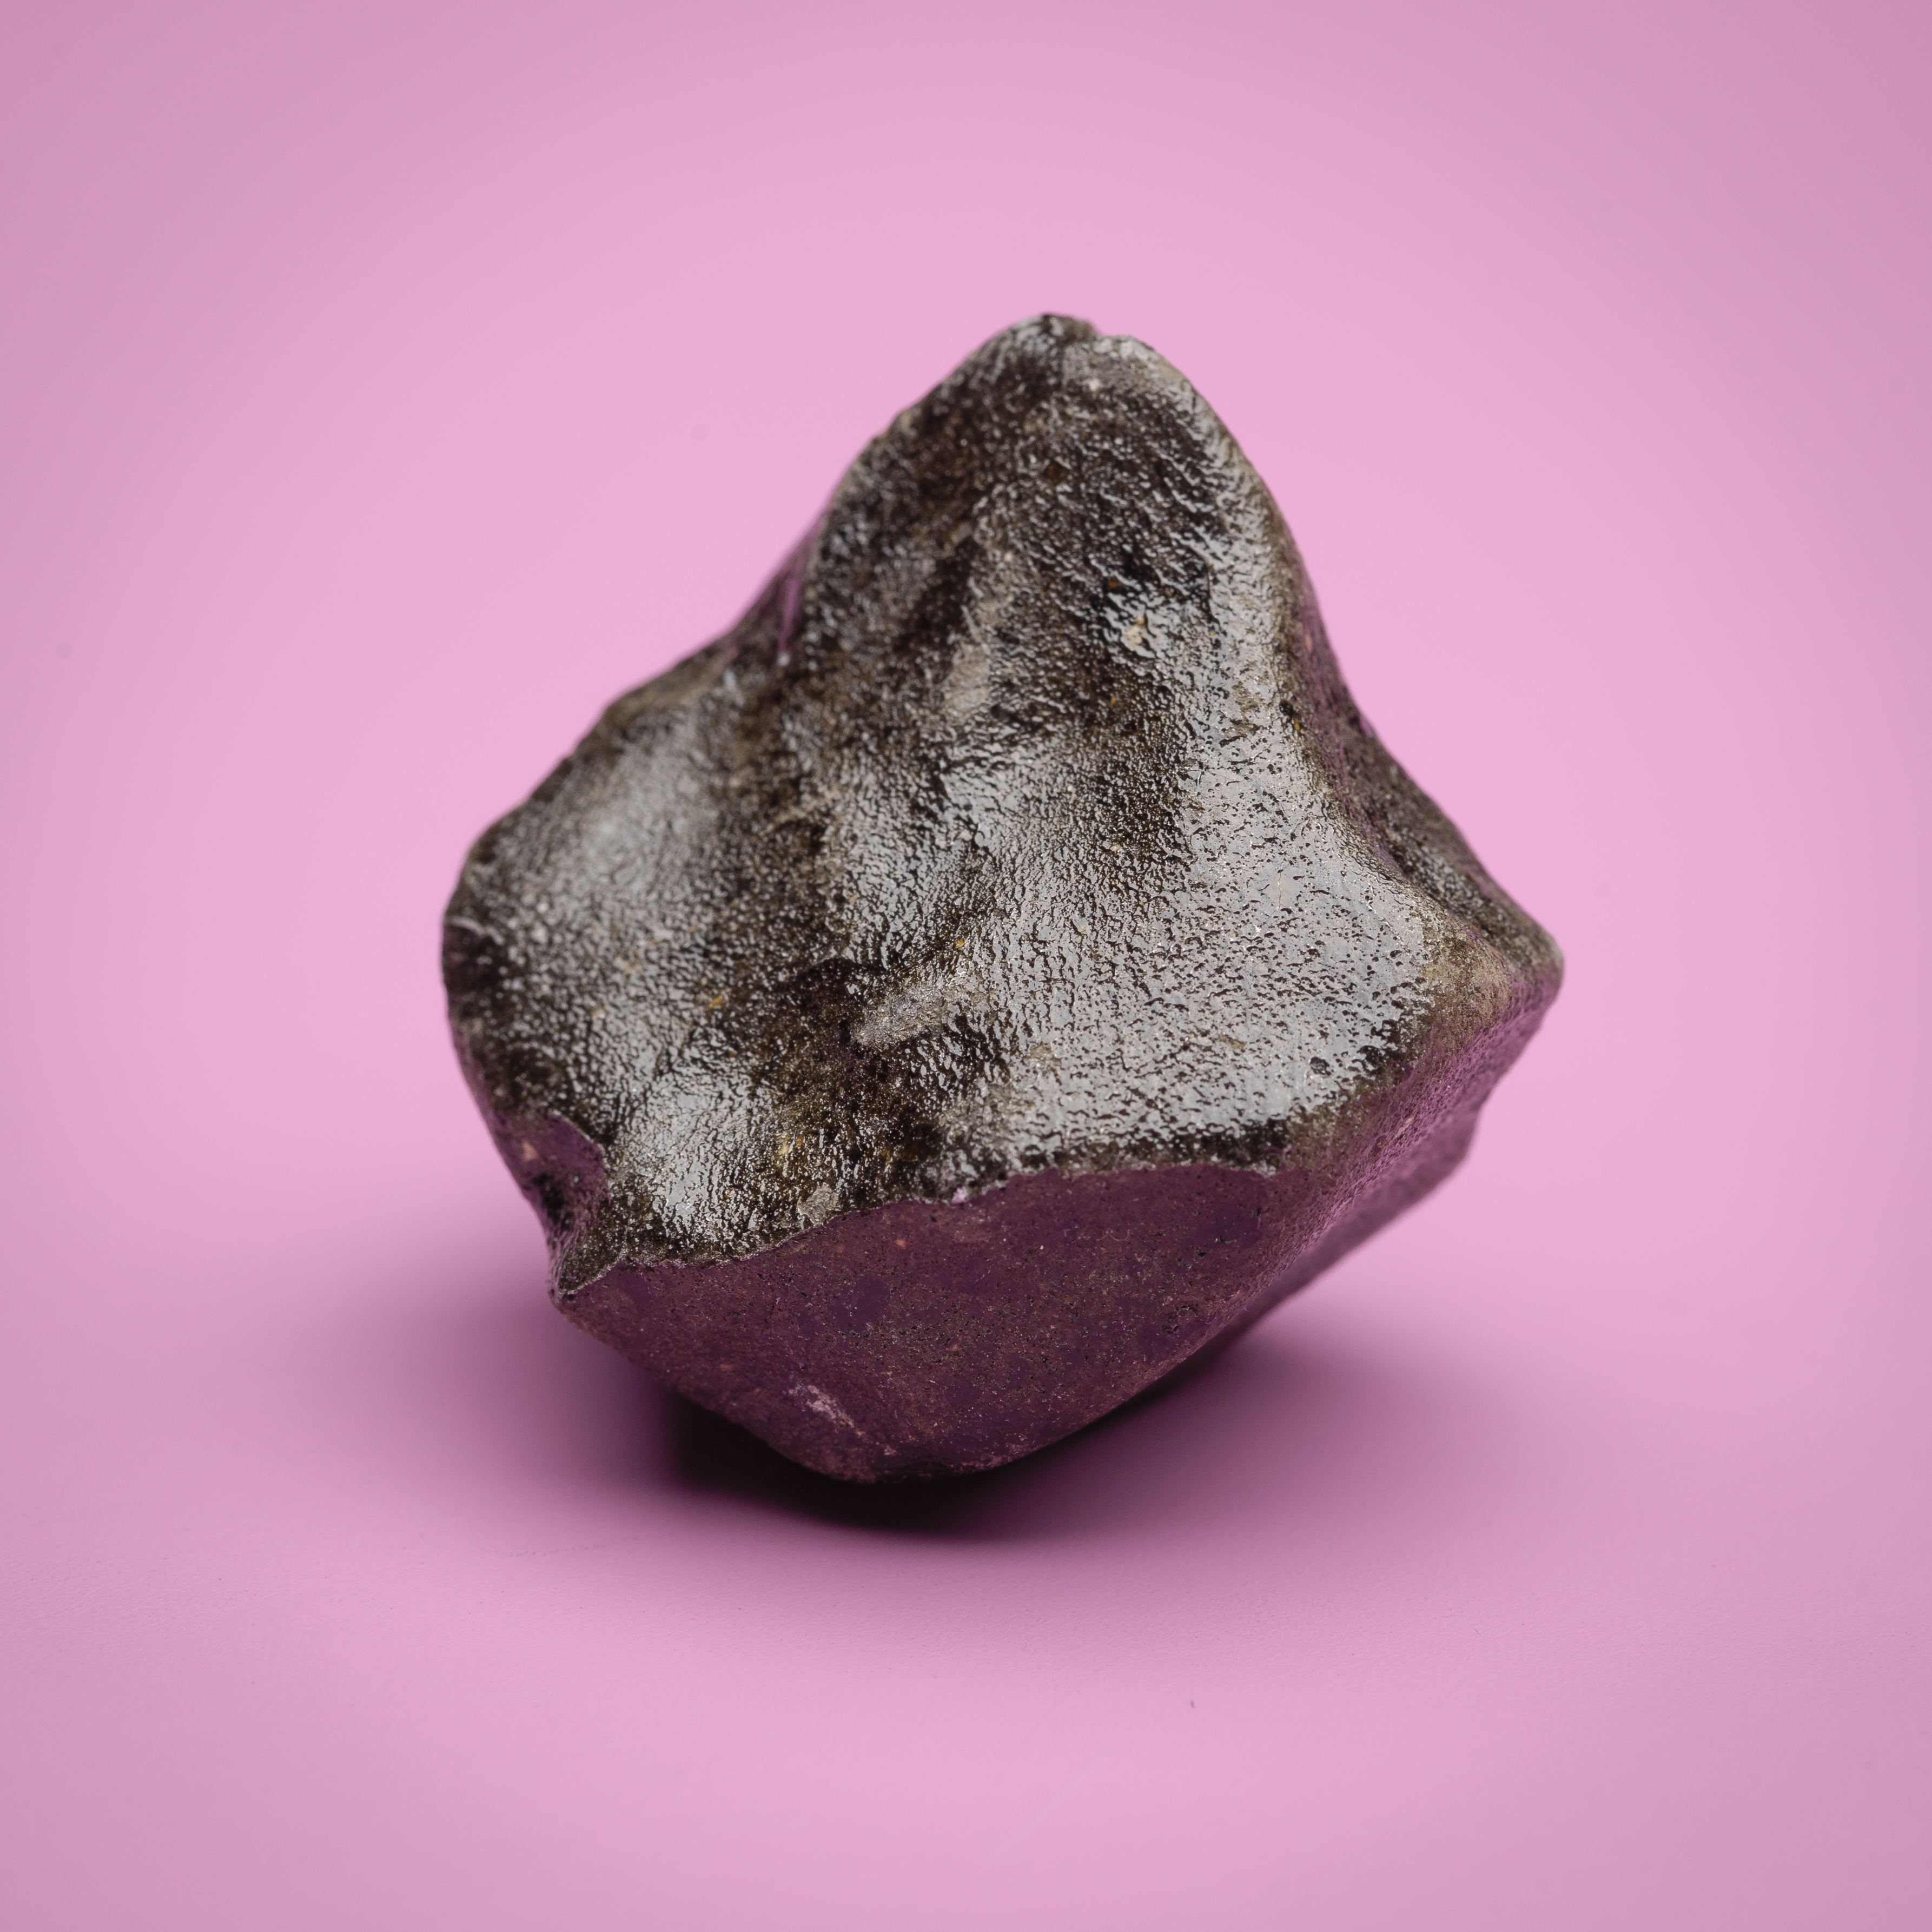 Um meteorito de Sariçiçek